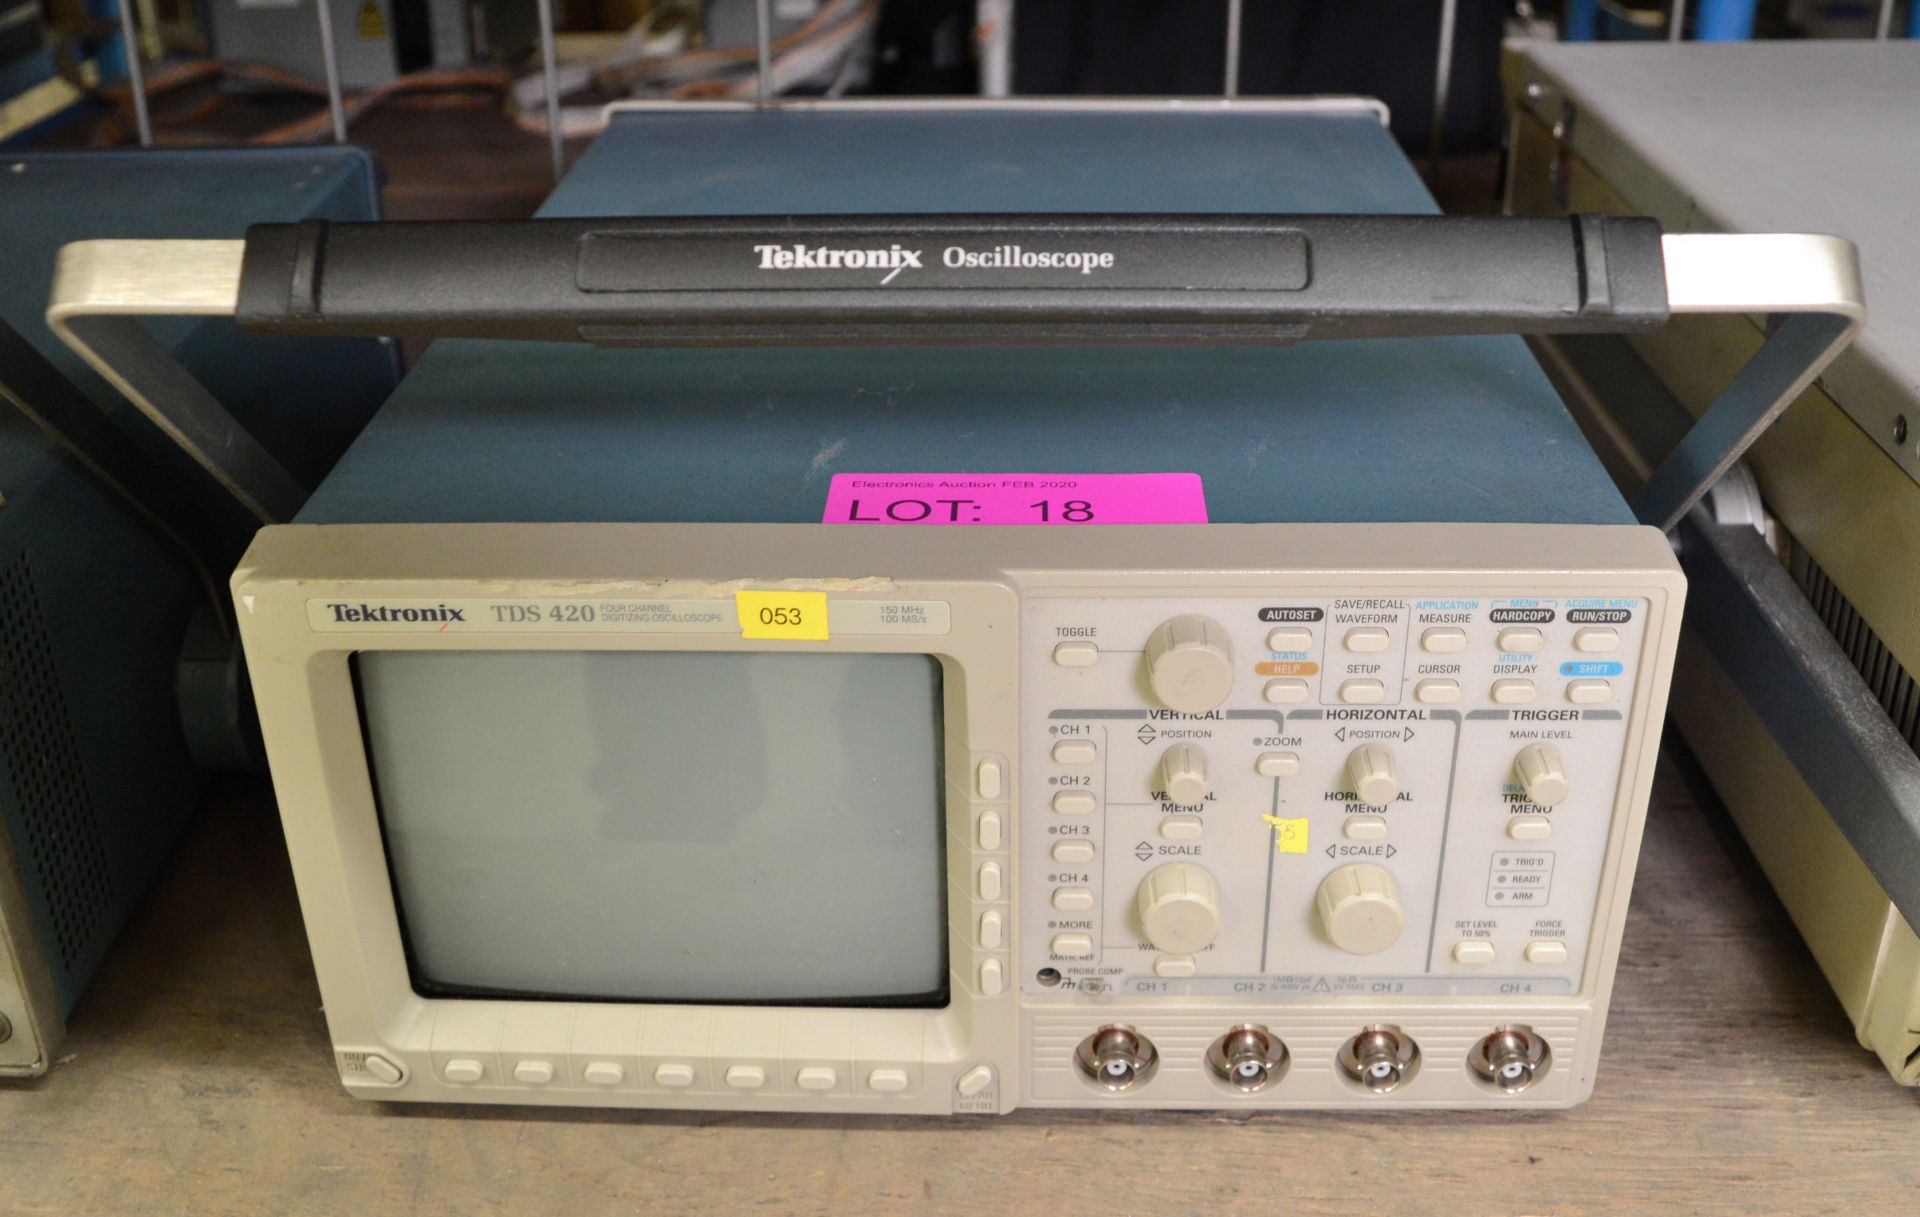 Tektronic TDS 420 Oscilloscope.